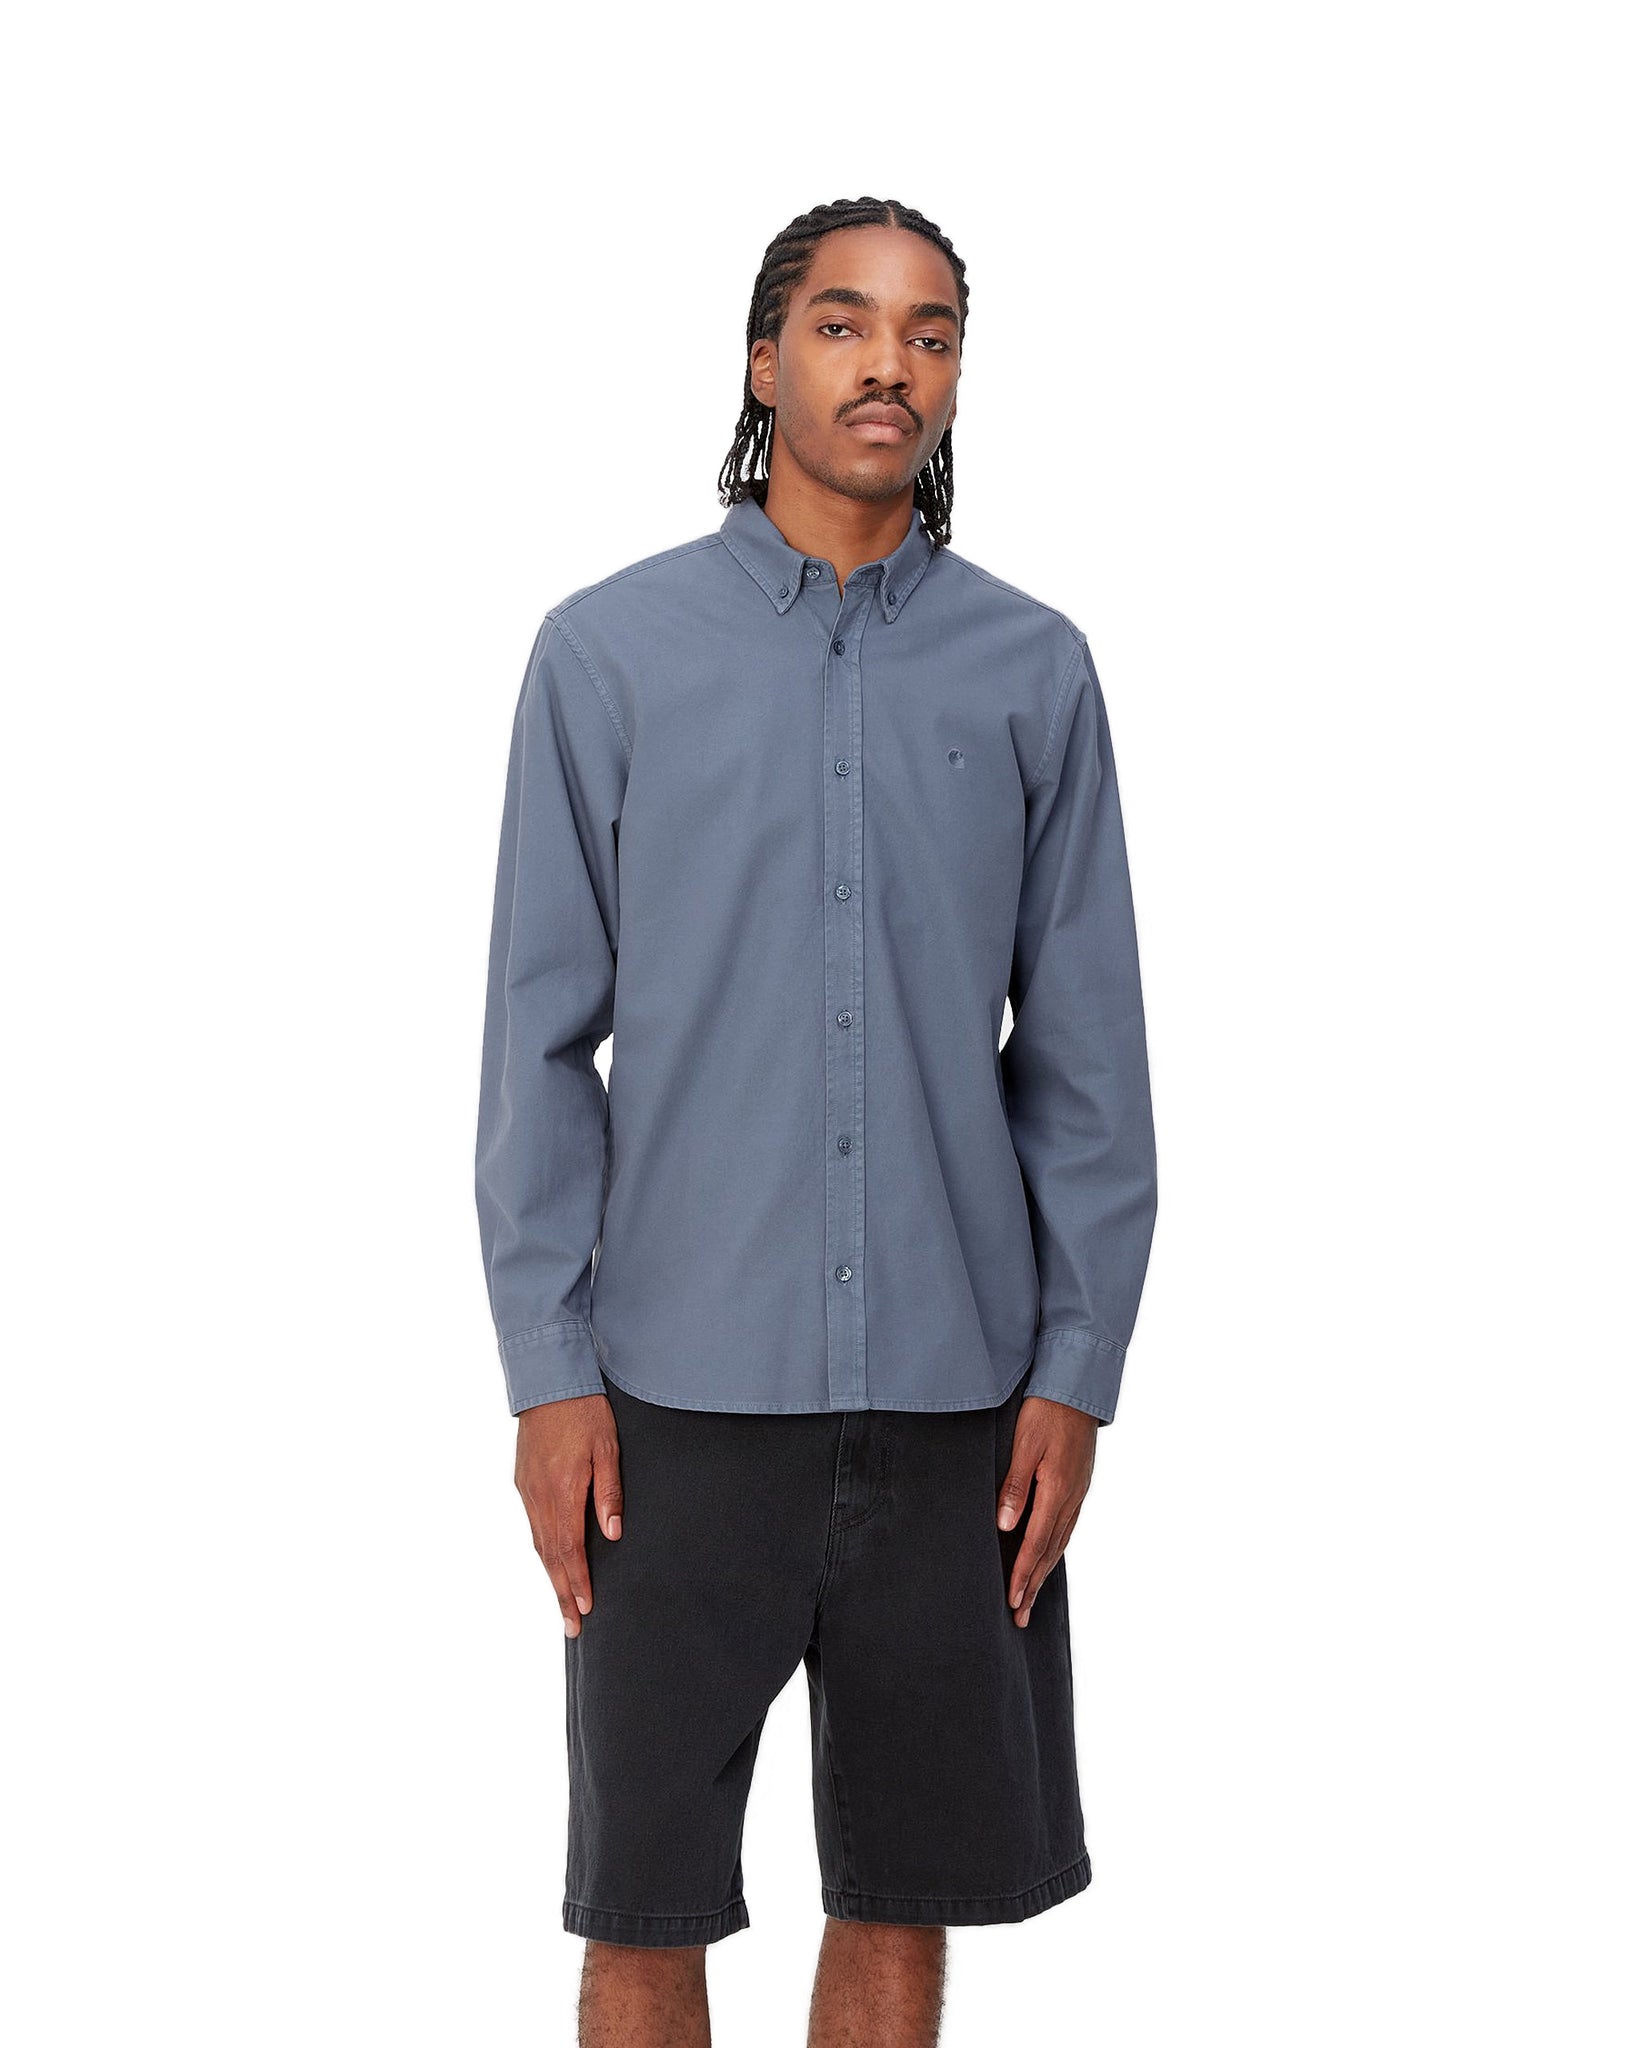 LS Bolton Shirt - Hudson Blue (garment dyed)